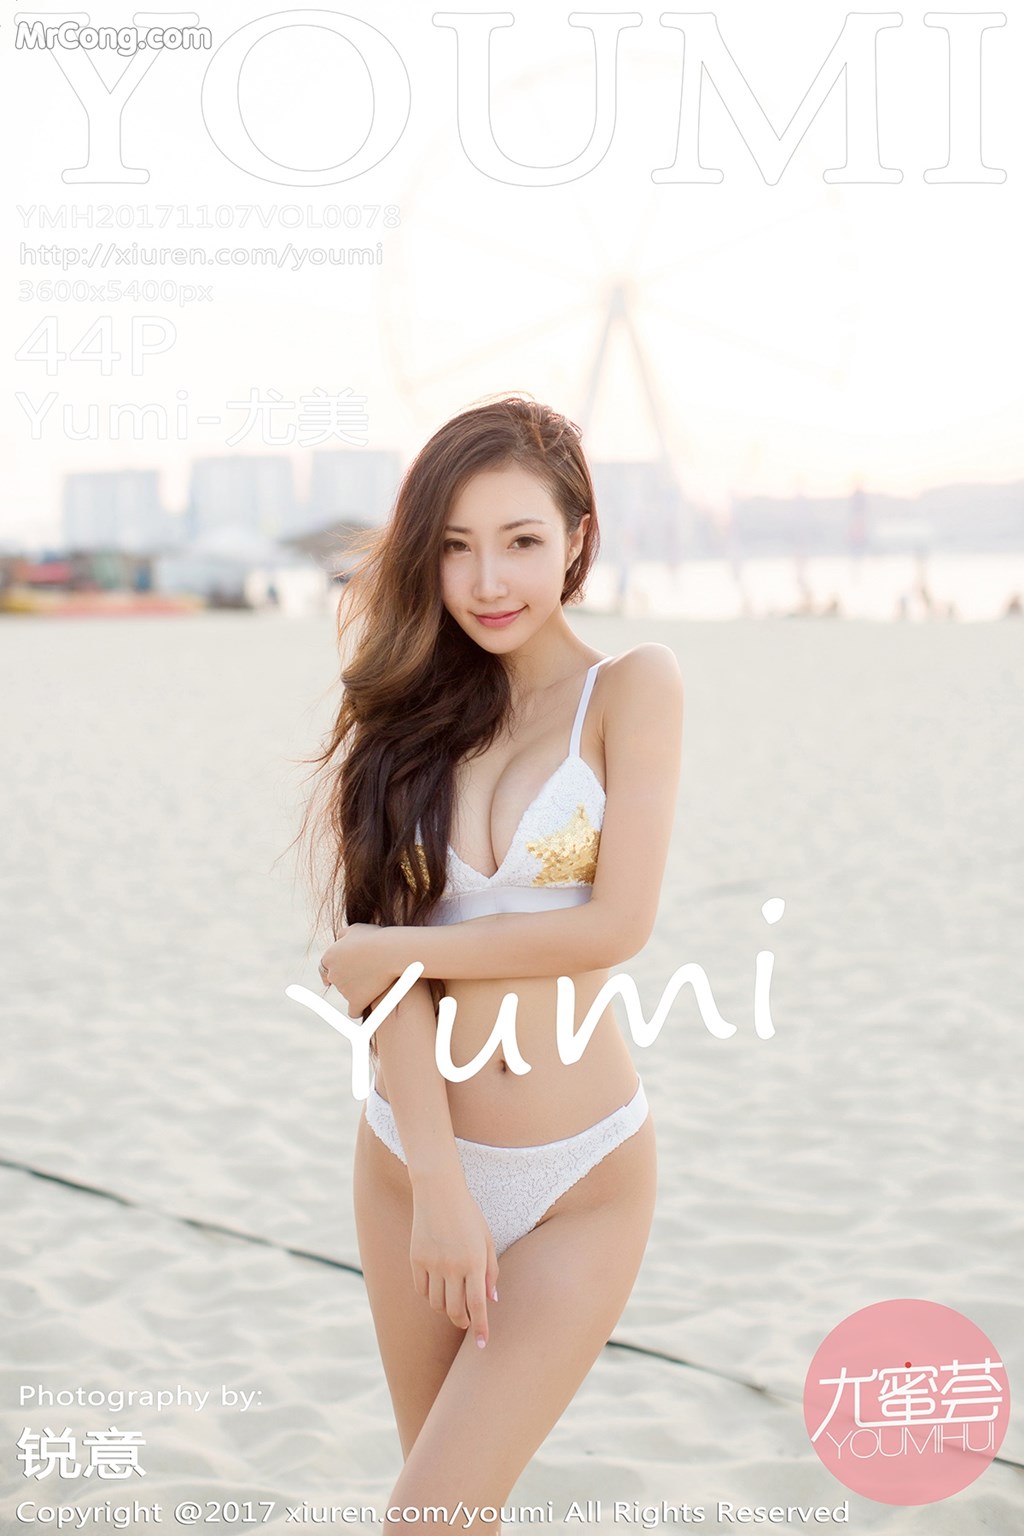 YouMi Vol.078: Model Yumi (尤 美) (45 pictures) photo 1-0